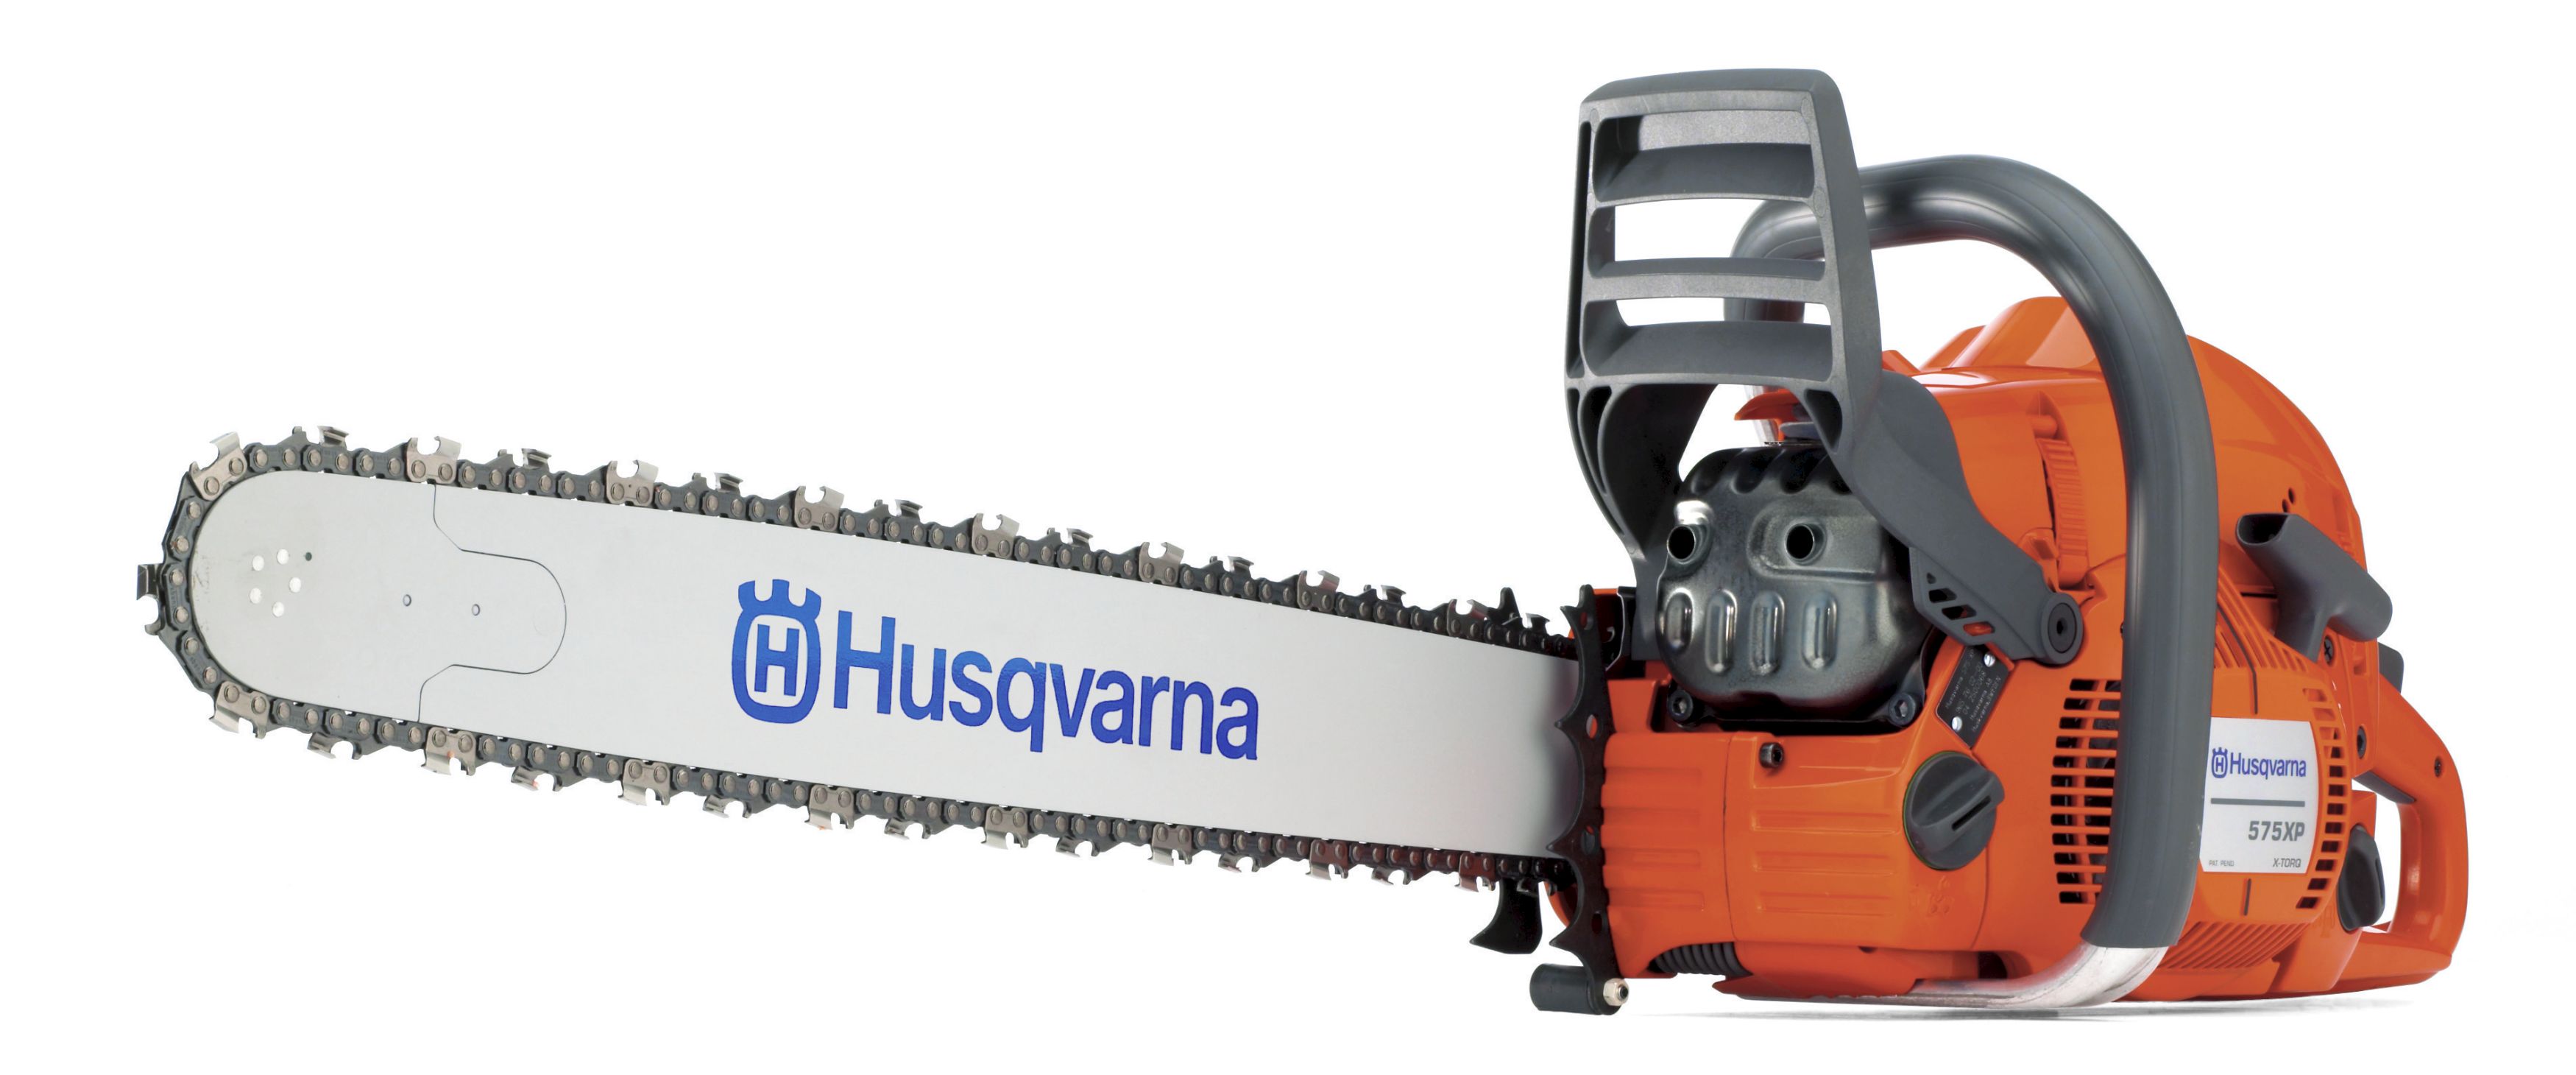 Husqvarna Chainsaw Model 575xp 2005 04 Parts And Repair Help Repair Clinic